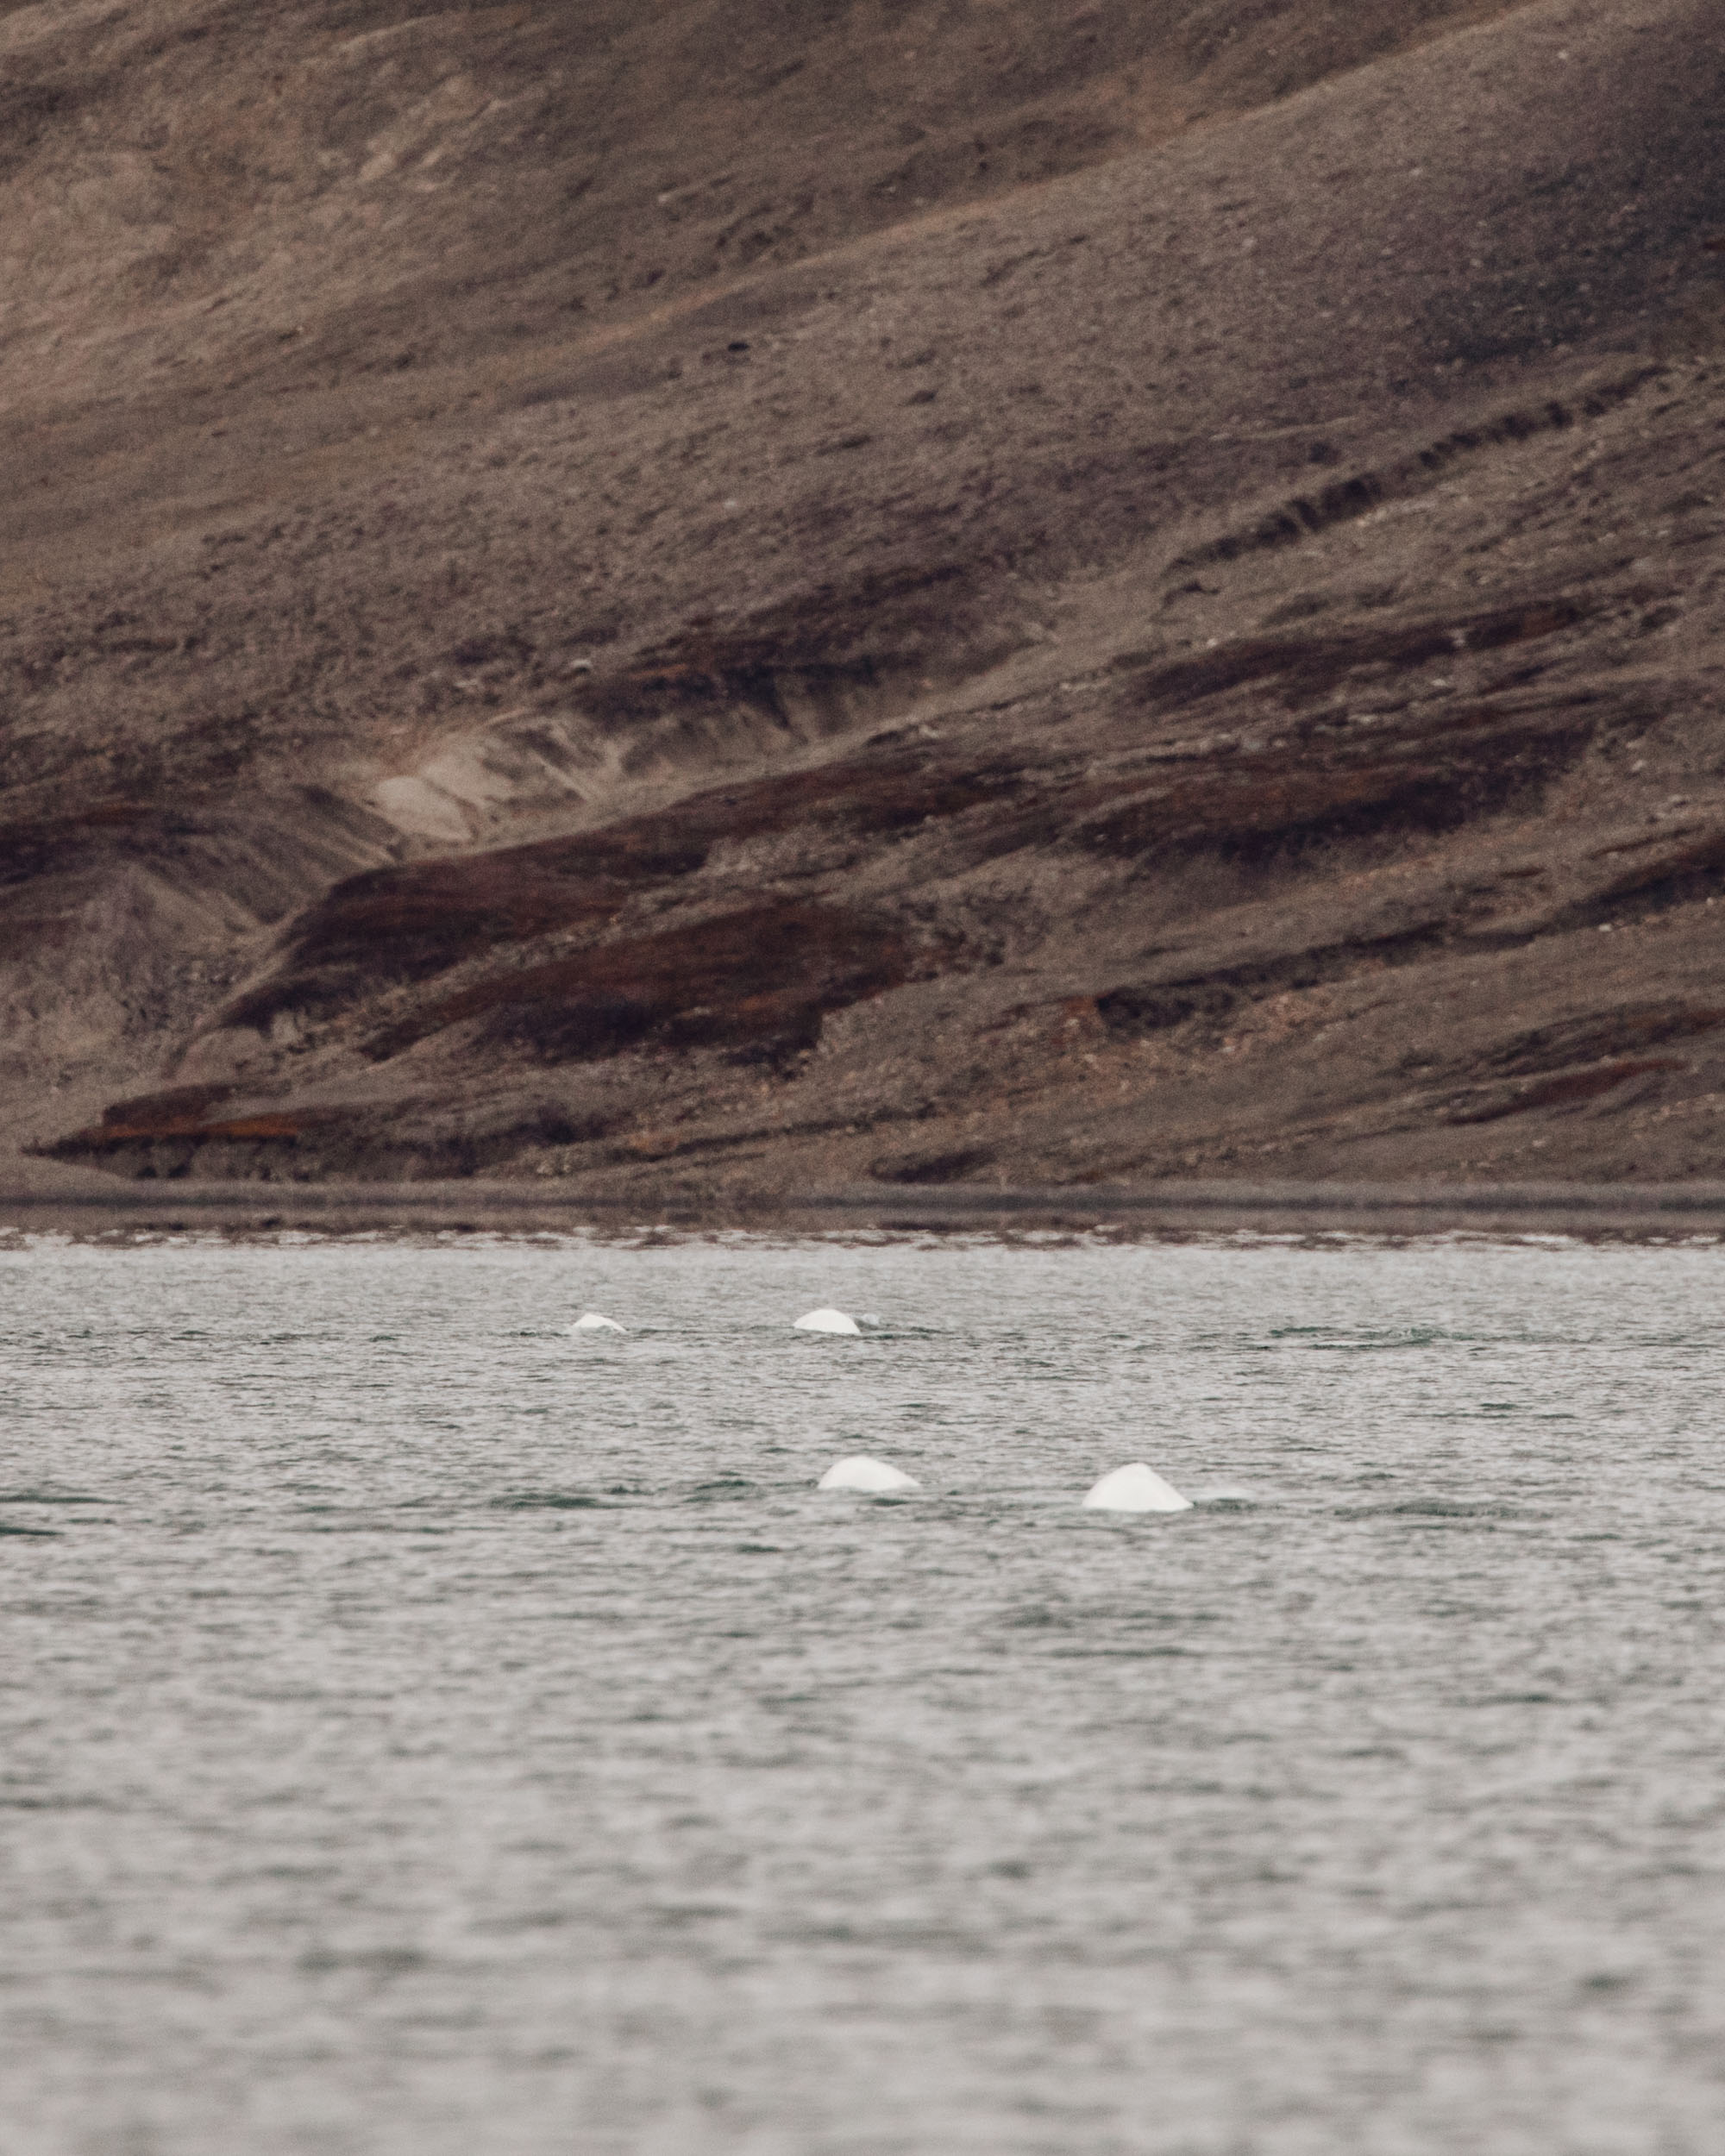 Beluga whales in Svalbard Trygghamna bay